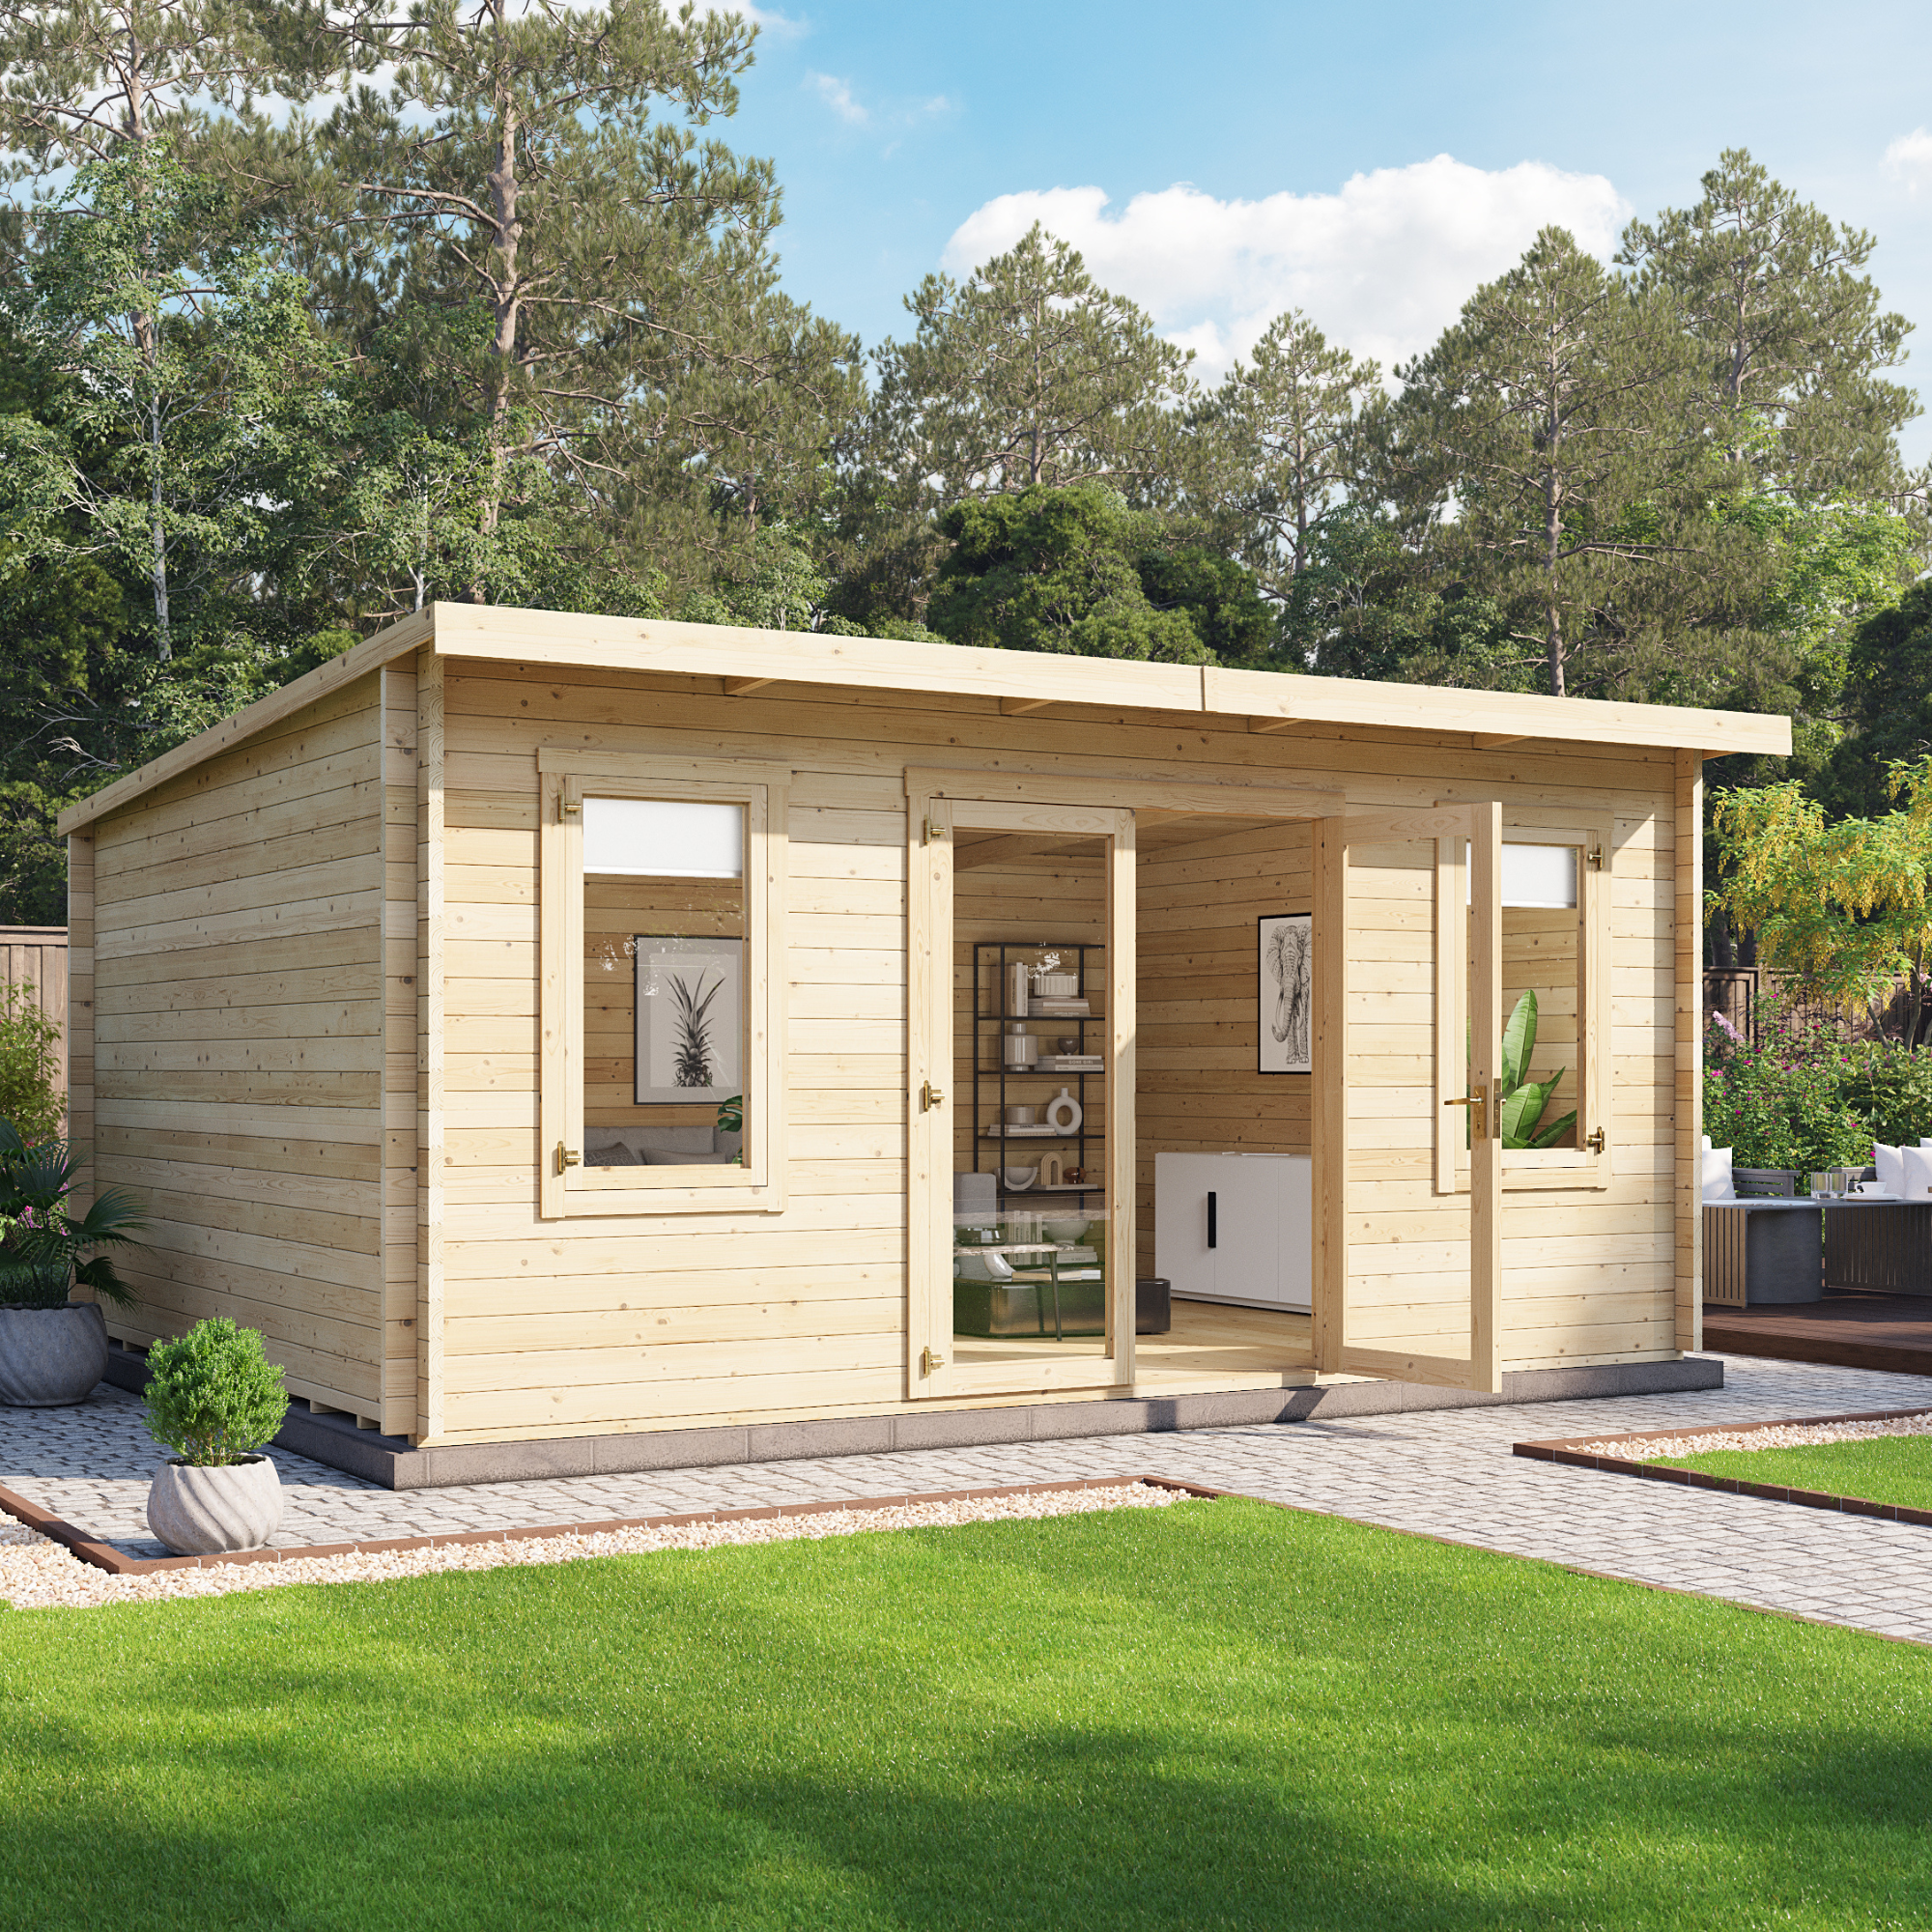 5 x 4 Log Cabin Summer House - BillyOh Fraya Pent Log Cabin - 44mm Thickness Wooden Log Cabin Summerhouses - 5m x 4m